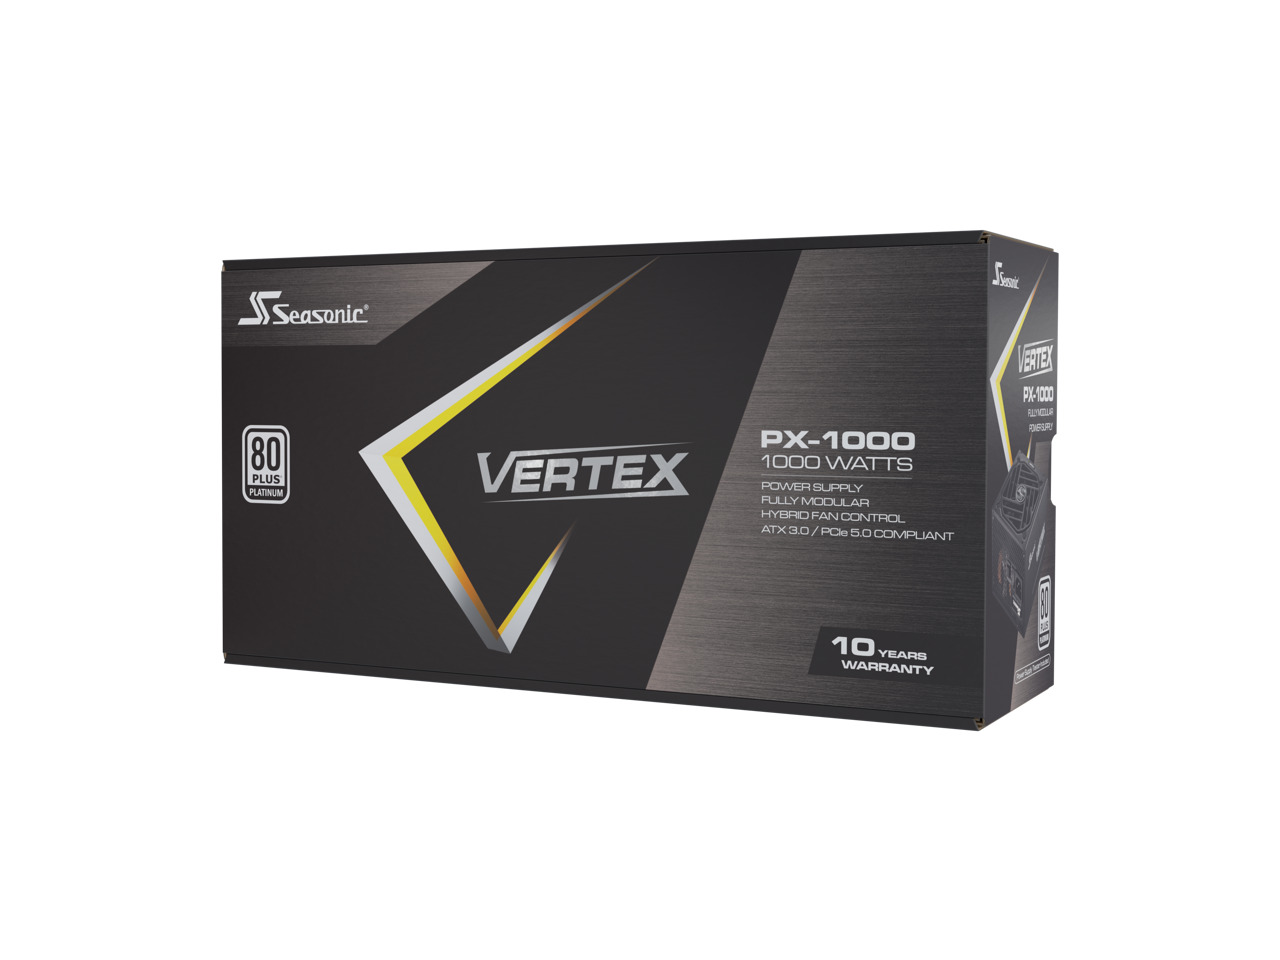 Seasonic VERTEX PX-1000 1000W 80+ Platinum ATX Full-Modular Power Supply PSU